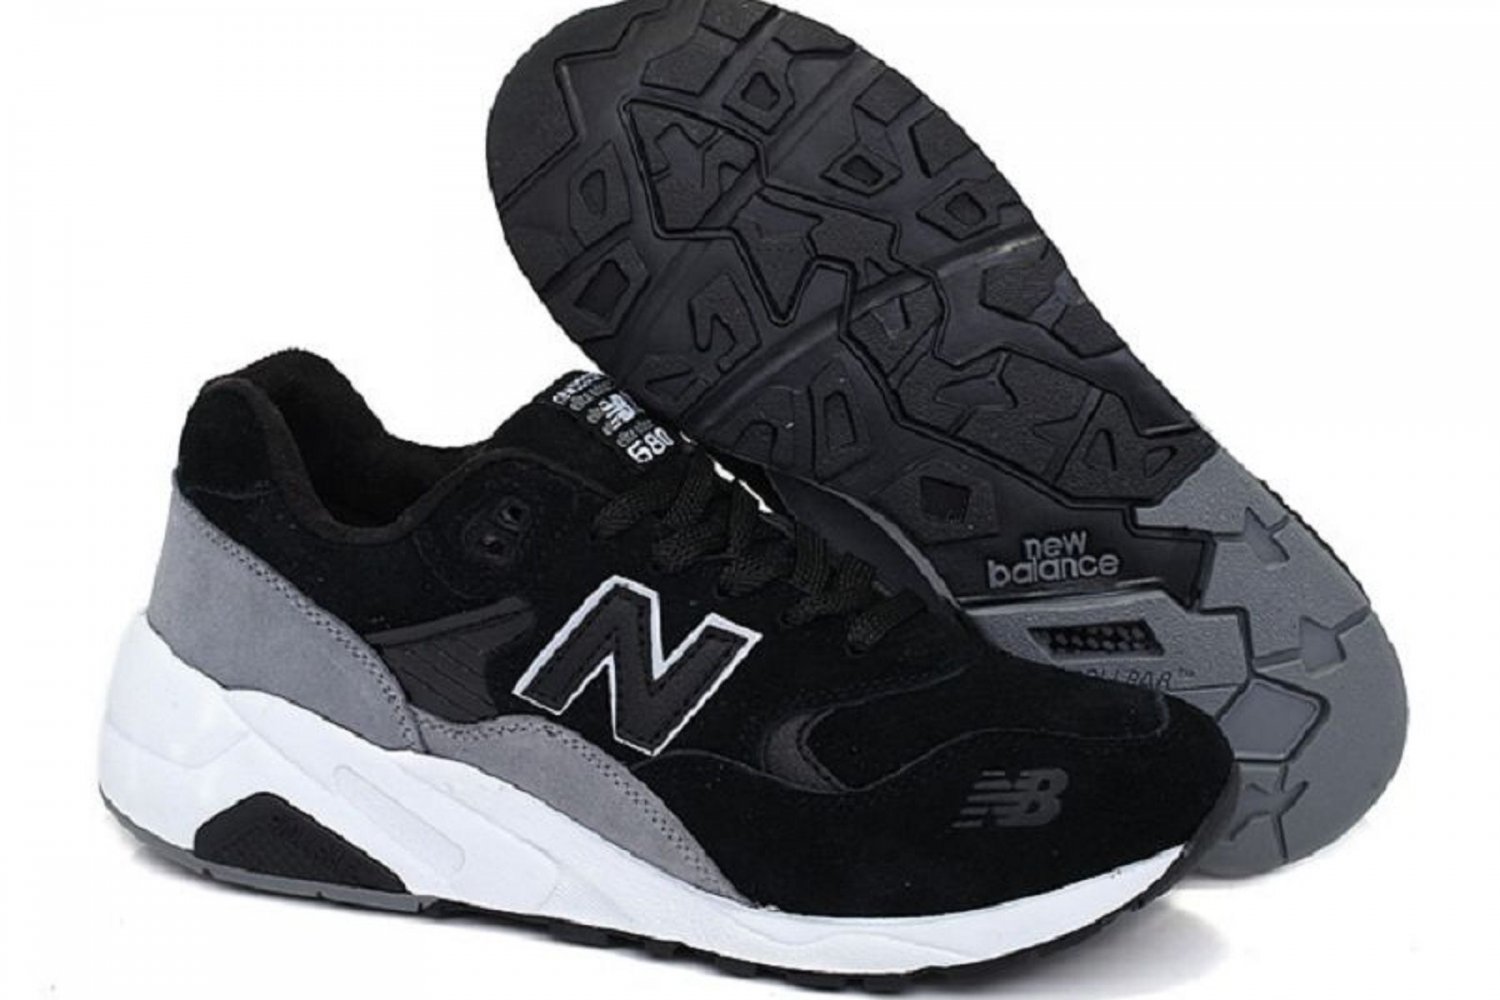 New Balance Neon 580 Running Shoes Womens Black Gray Shop